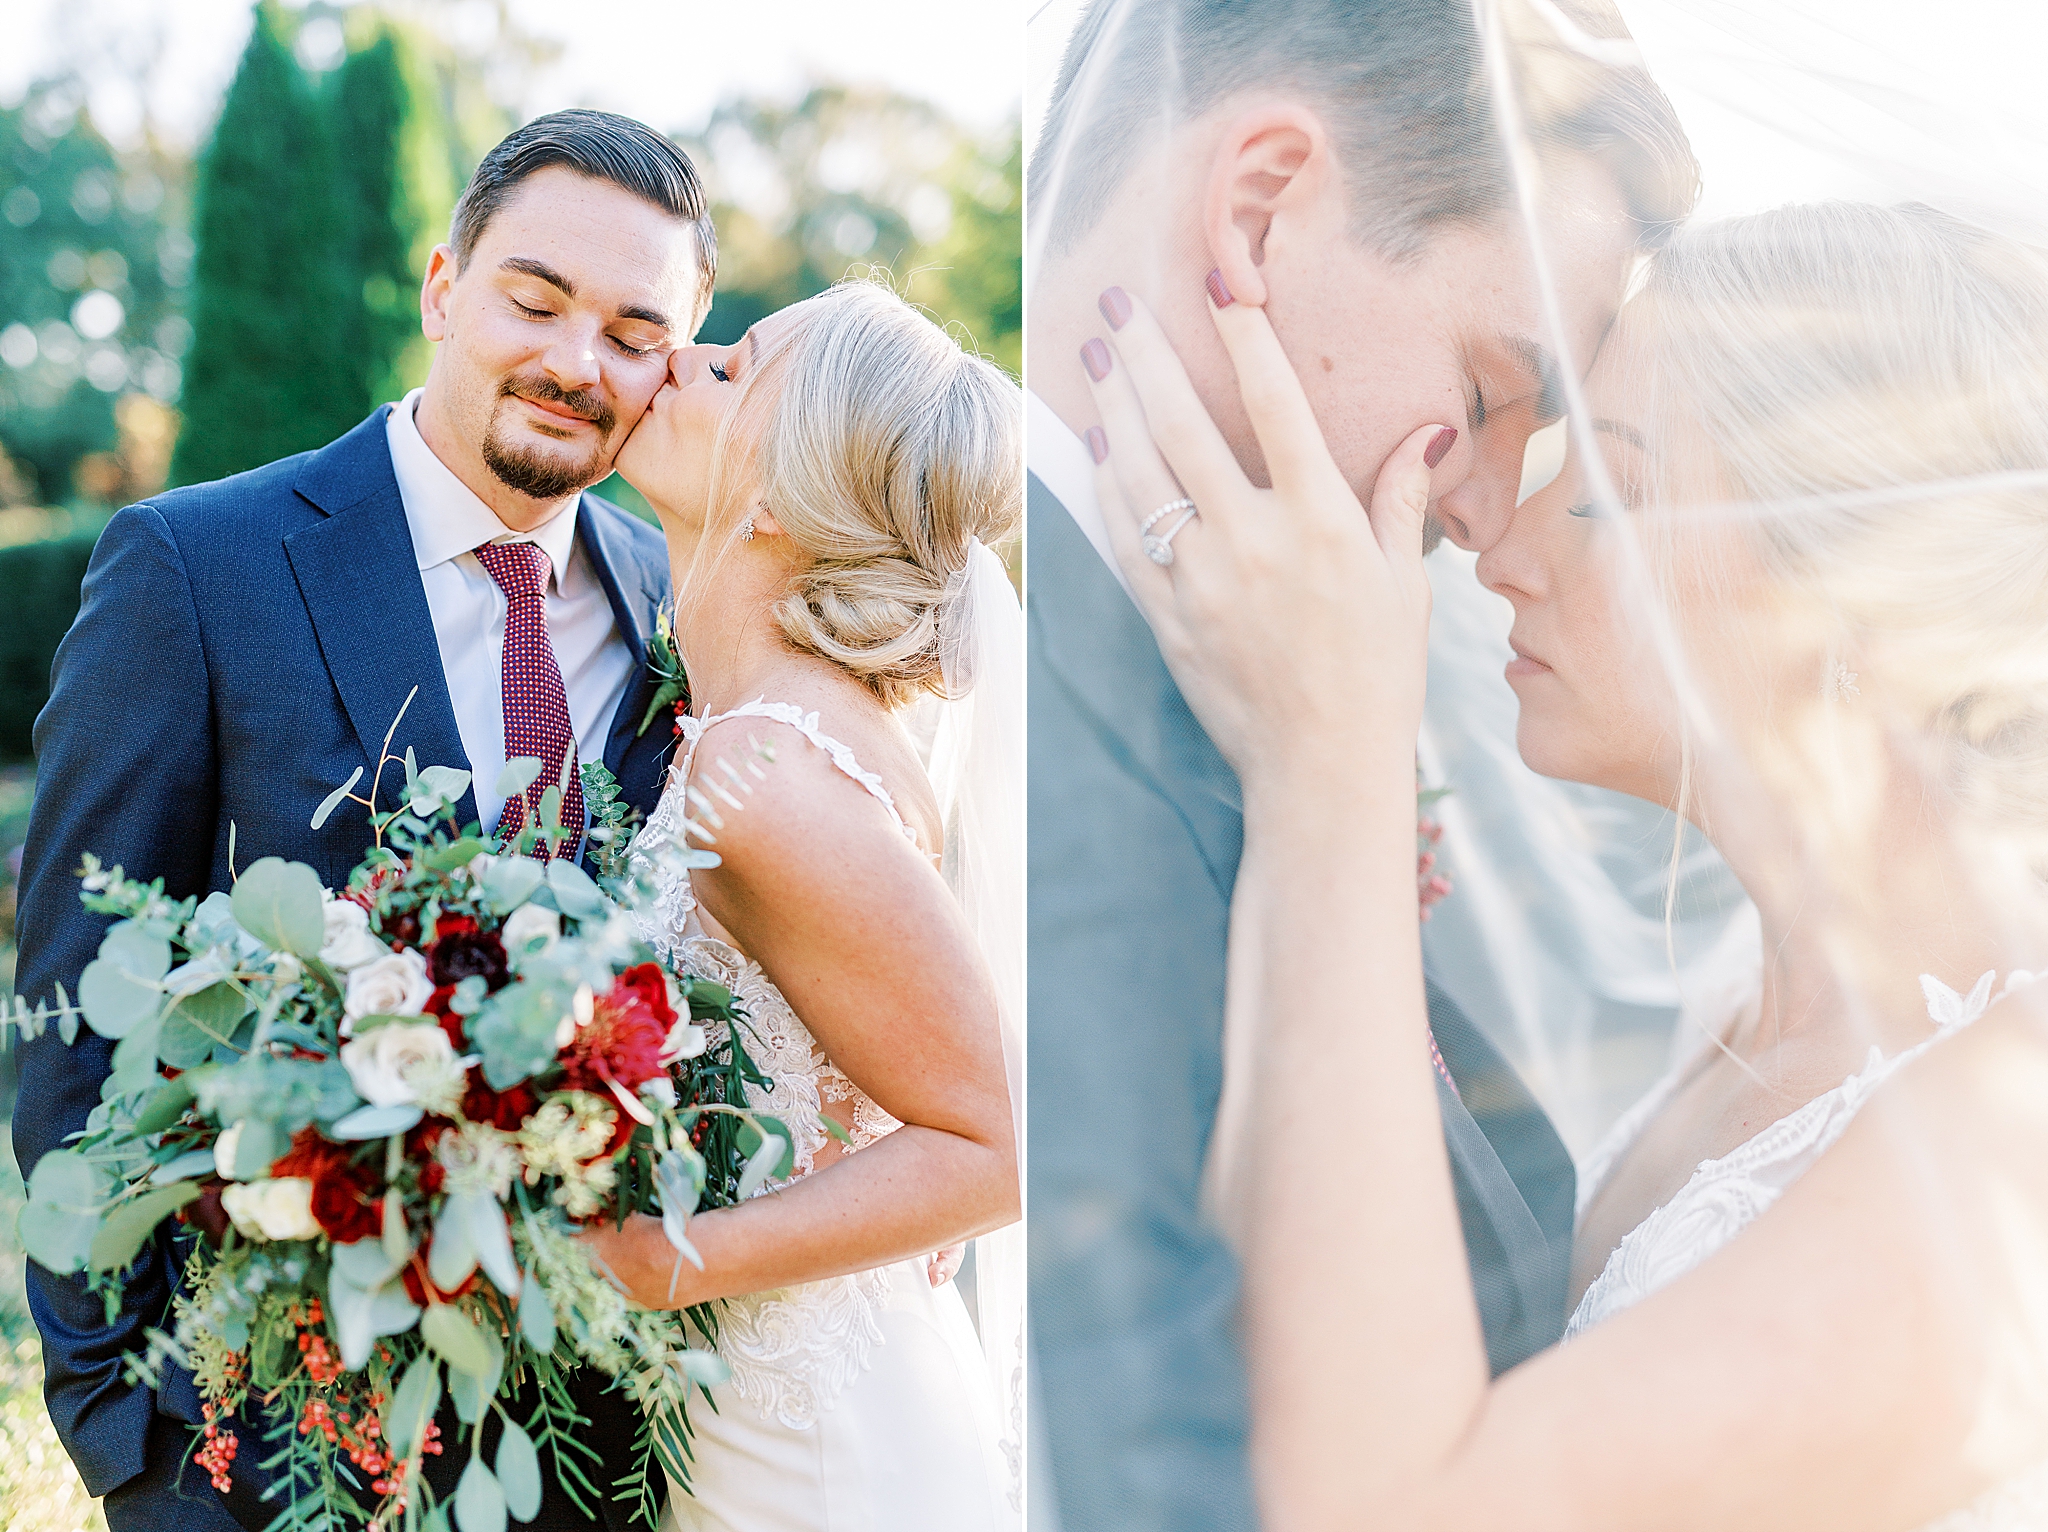 newlyweds kiss under bride's veil